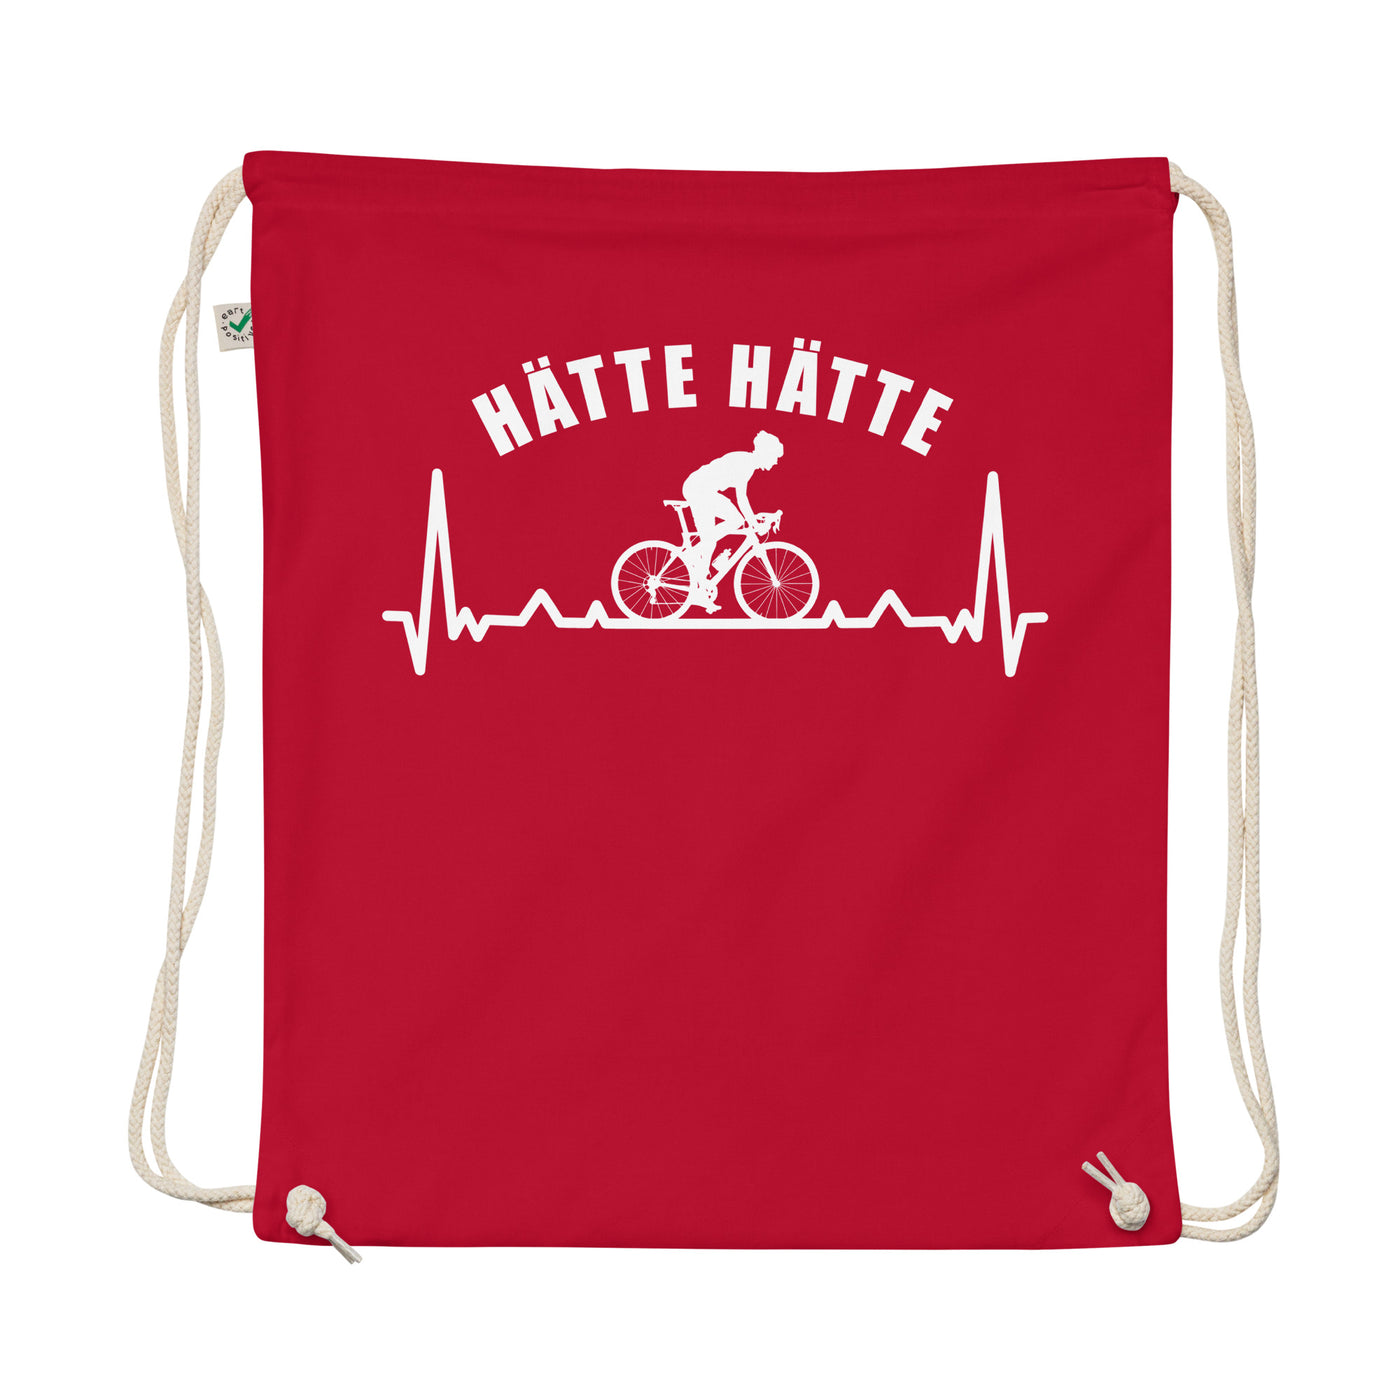 Hatte Hatte 3 - Organic Turnbeutel fahrrad